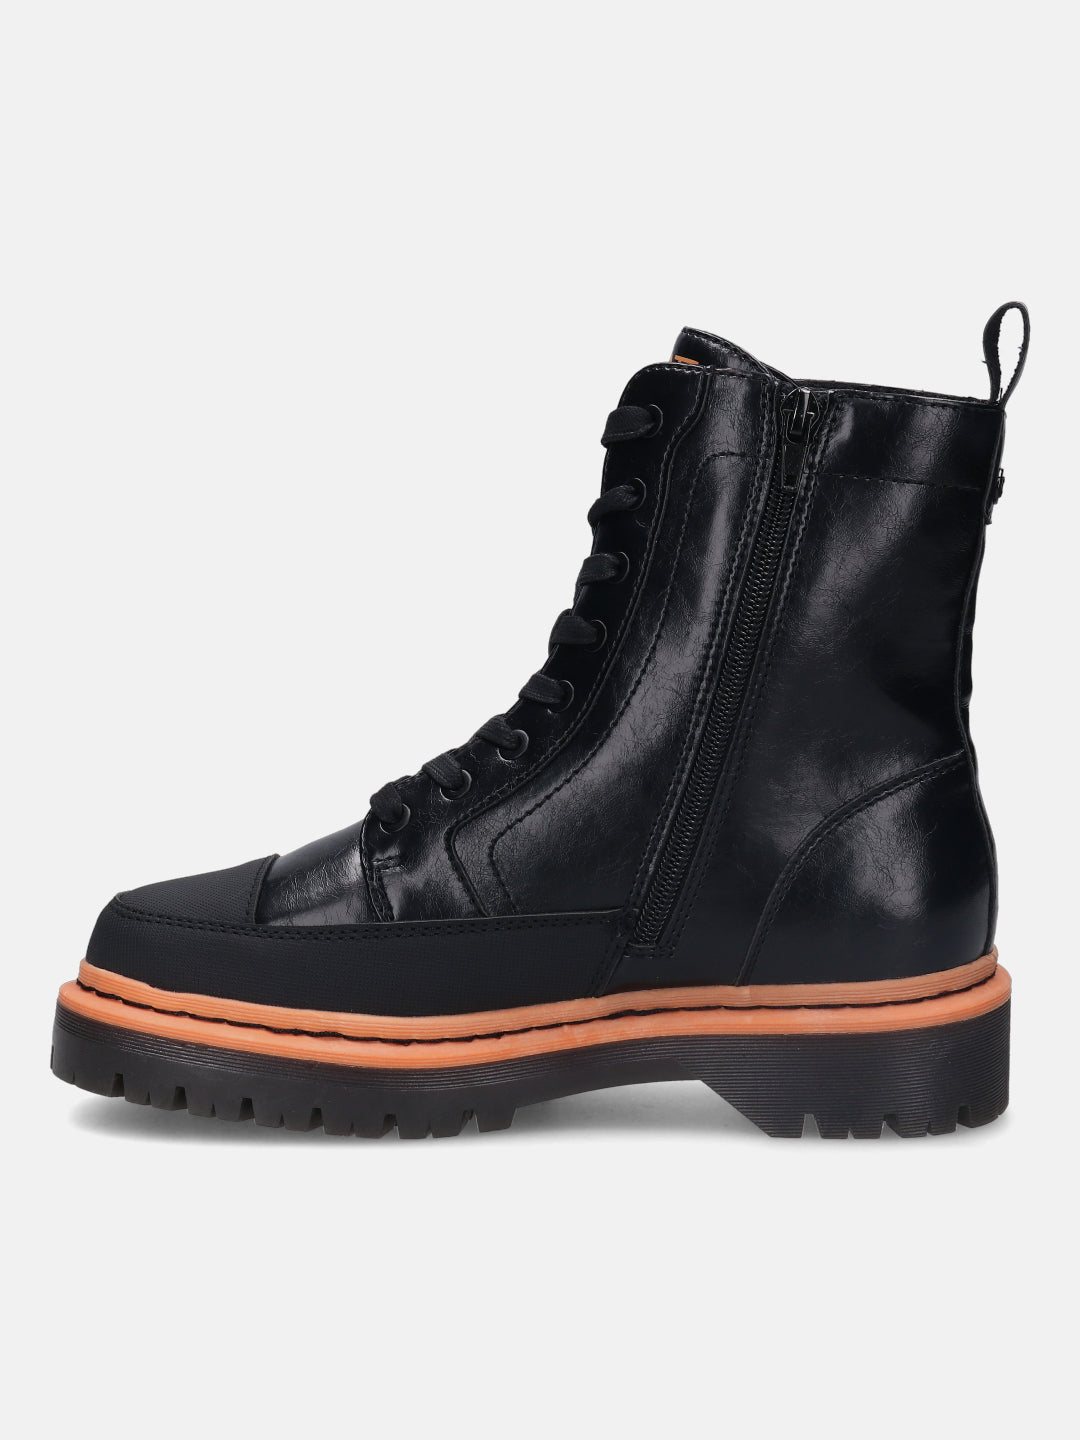 Big Black & Orange Ankle Boots - BAGATT